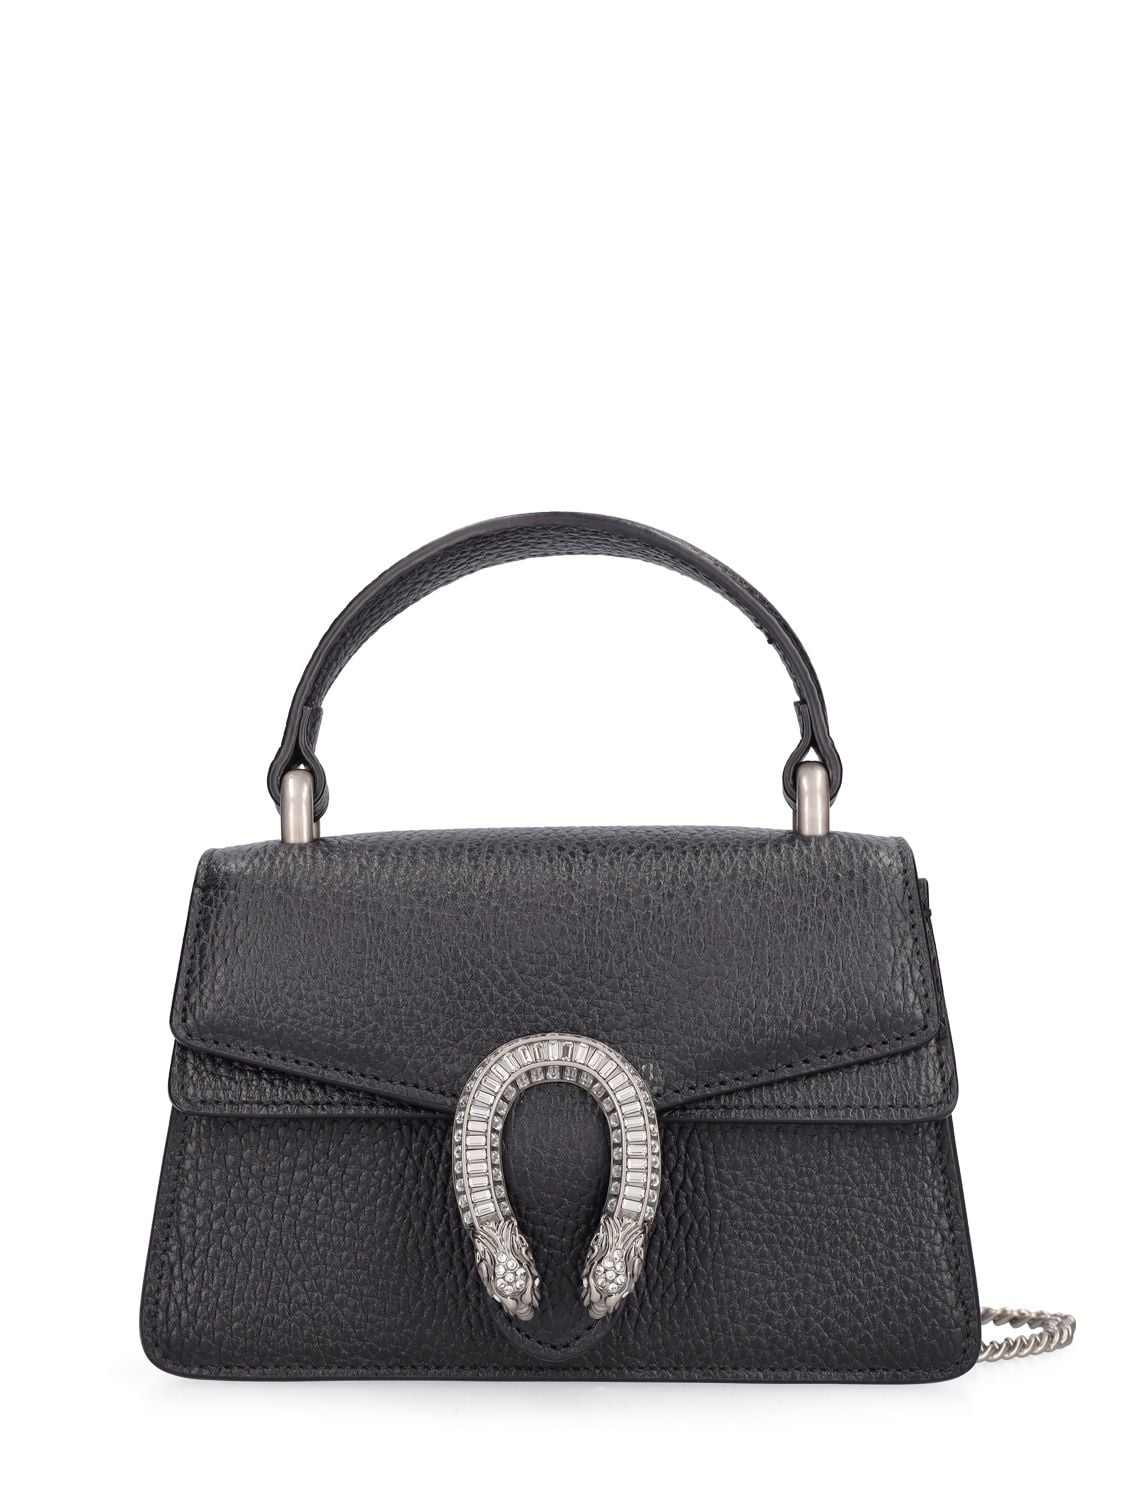 Gucci Super Mini Leather Shoulder Bag In Black